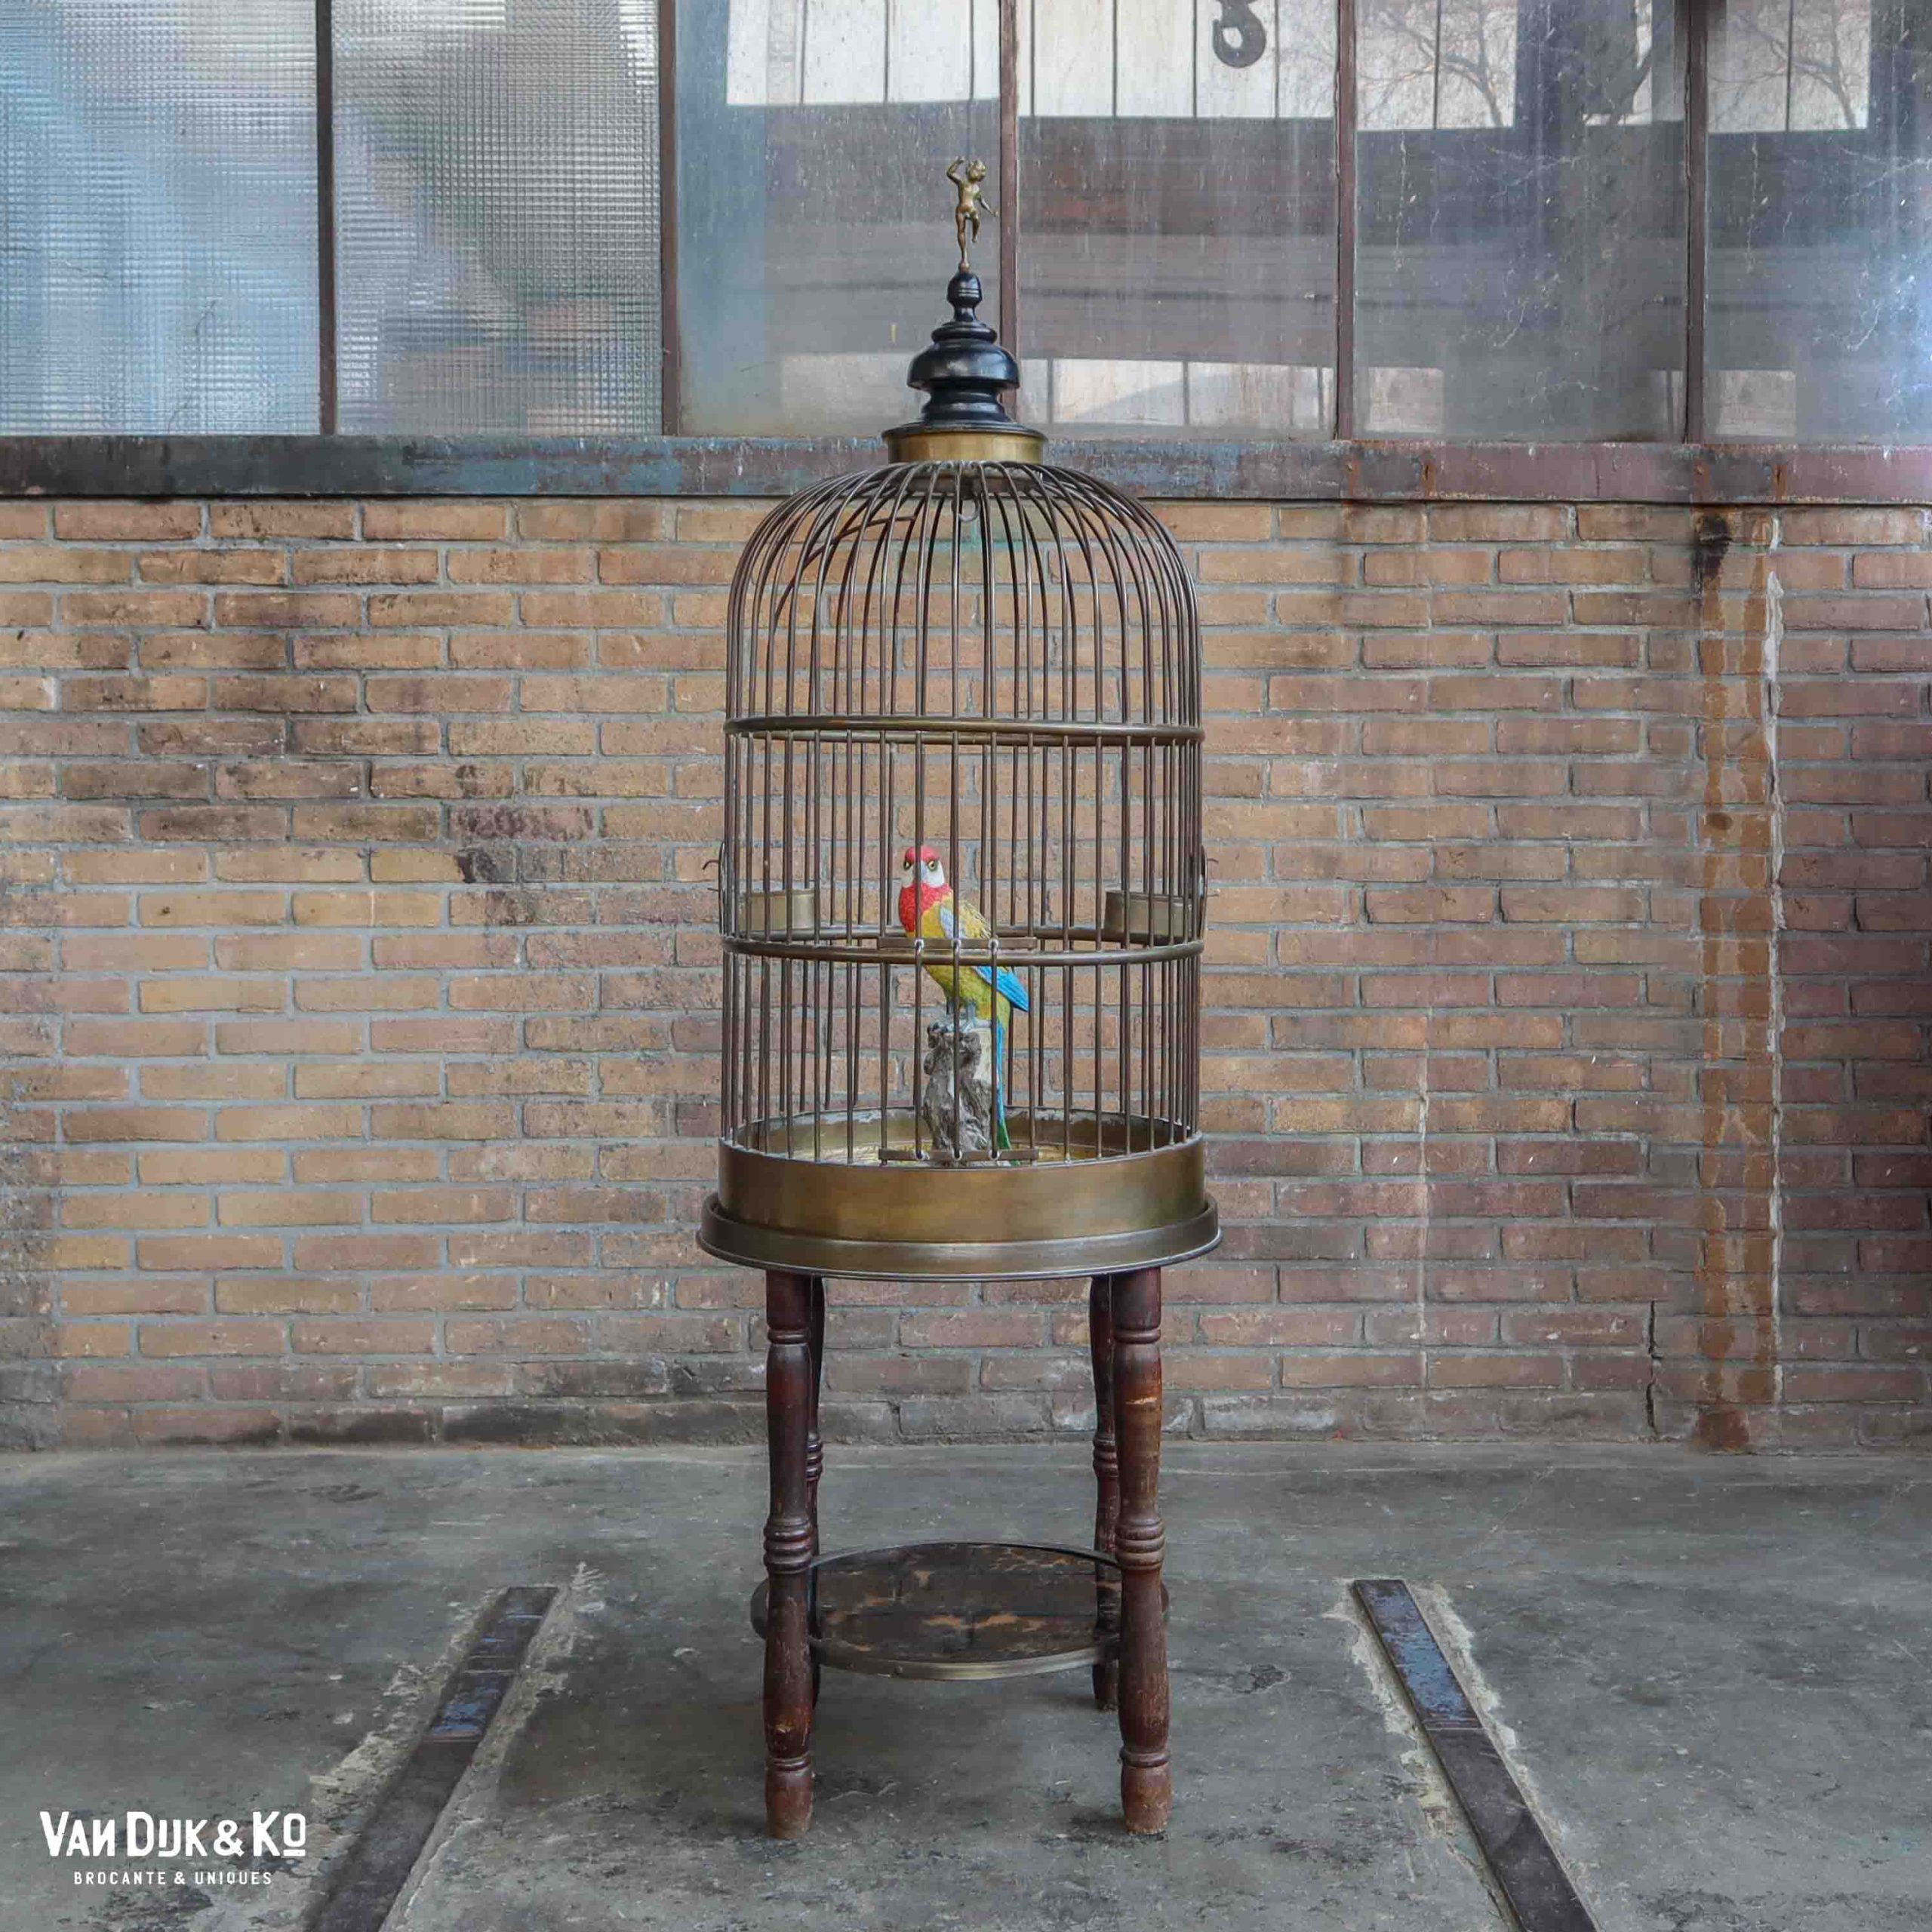 ouder Uitsteken Lenen Vintage vogelkooi met (nep) papegaai » Van Dijk & Ko